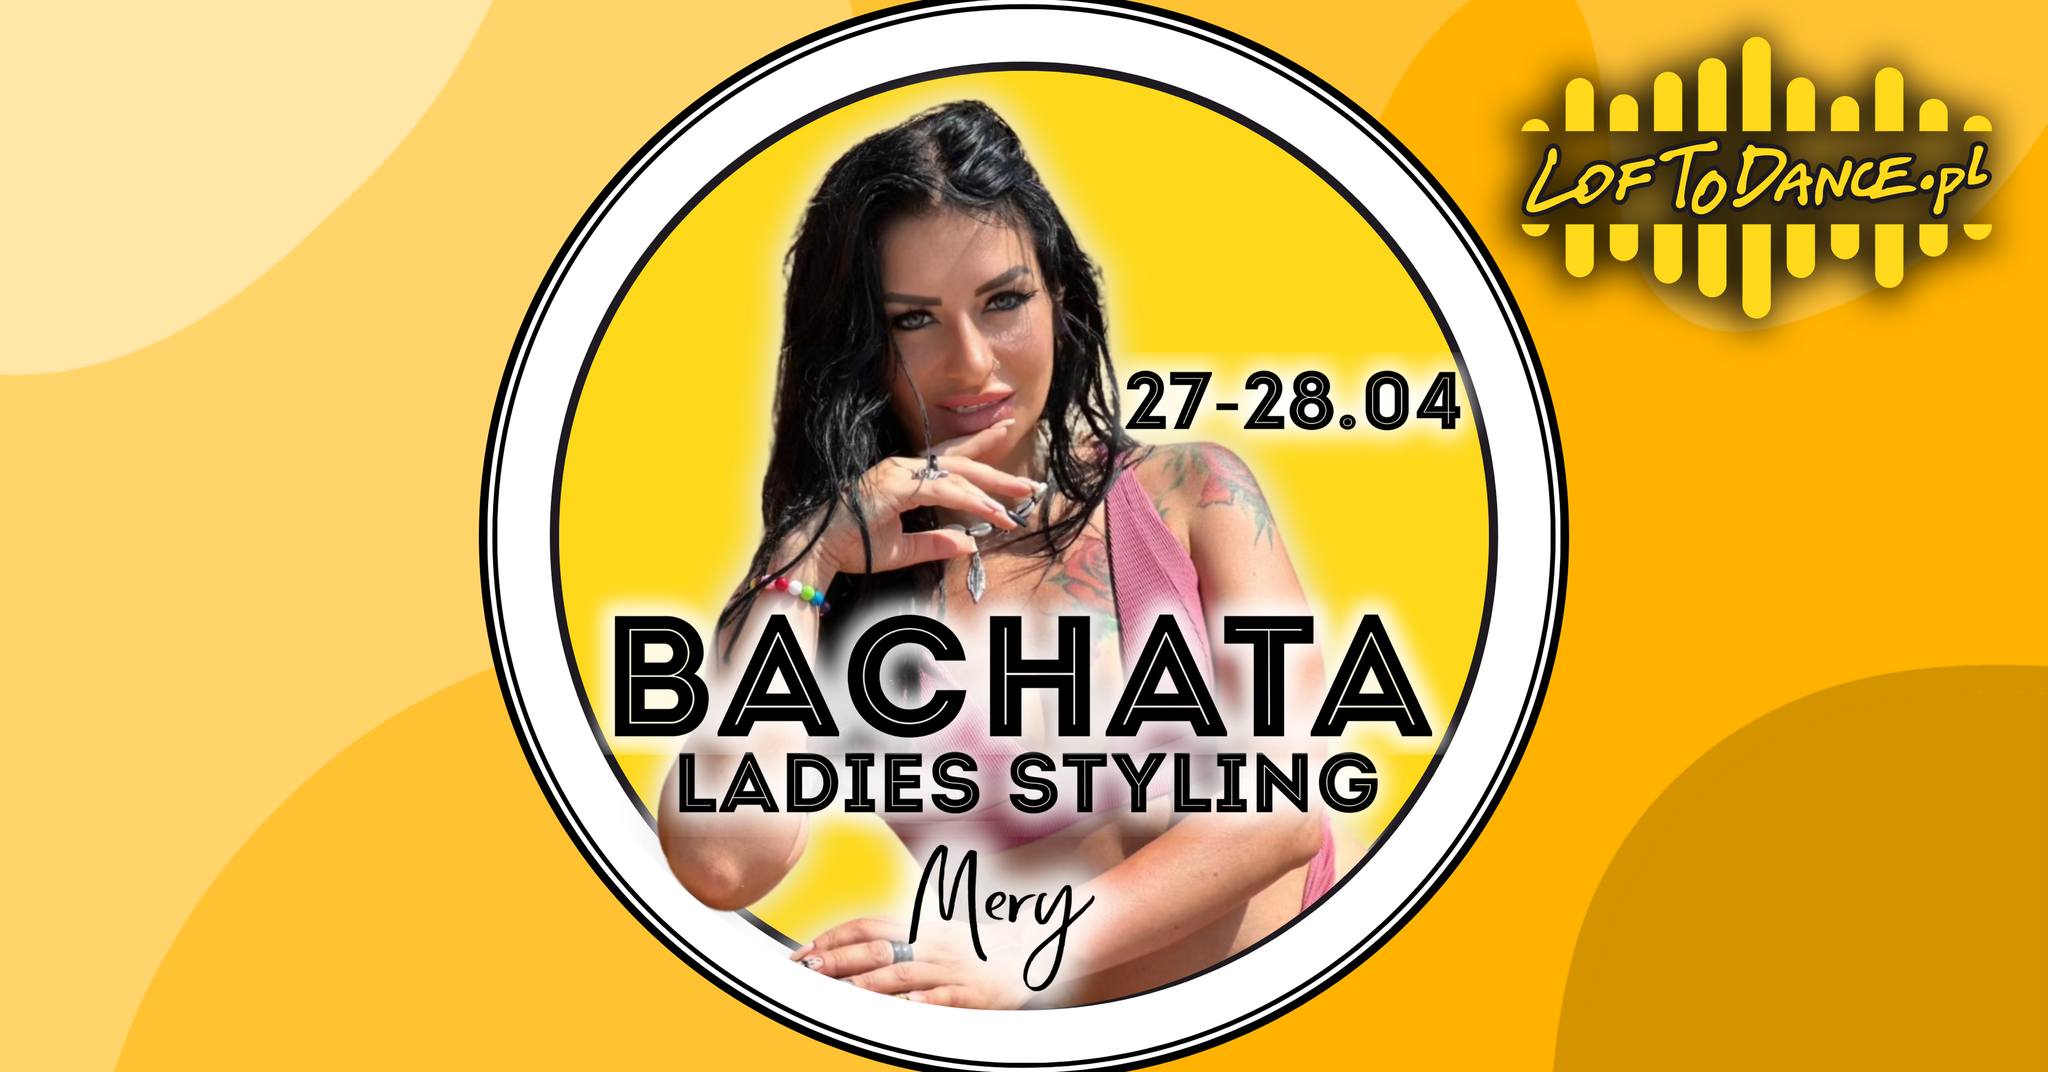 Bachata Ladies styling - sklep Loftodance